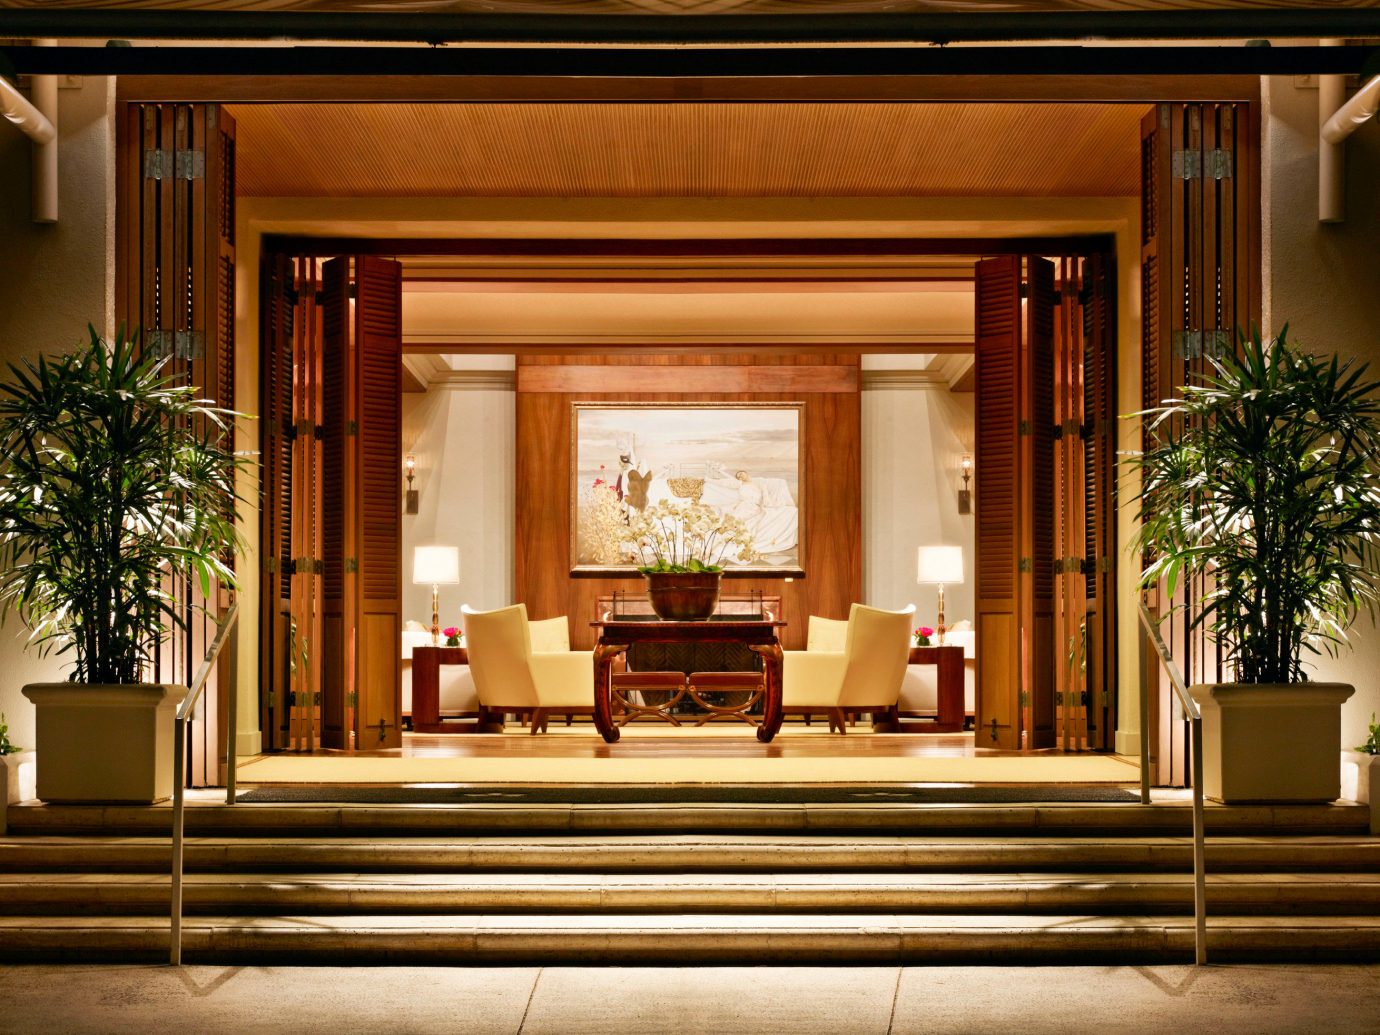 Boutique Hotels Design Hawaii Honolulu Hotels Lounge Luxury Resort indoor Lobby window home Architecture interior design estate lighting living room hall mansion furniture